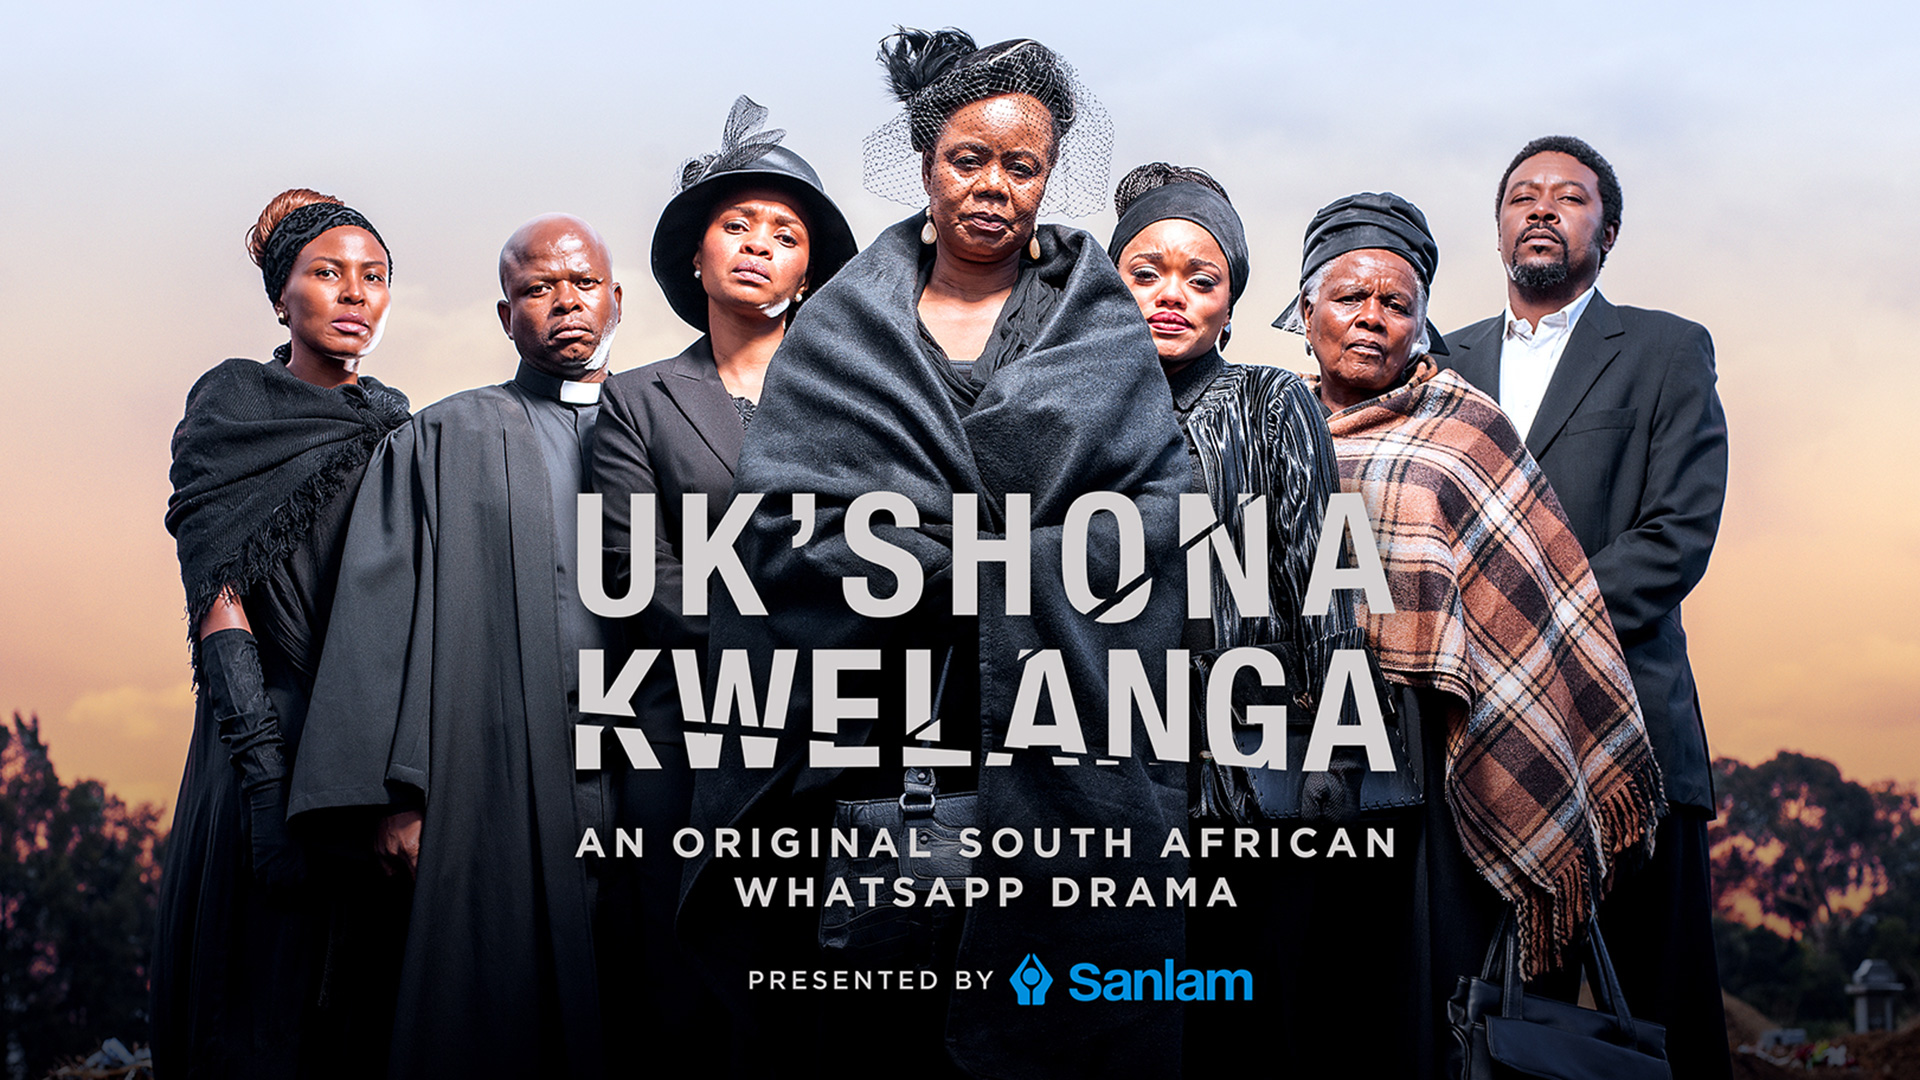 Uk'shona Kwelanga - a WhatsApp Drama series